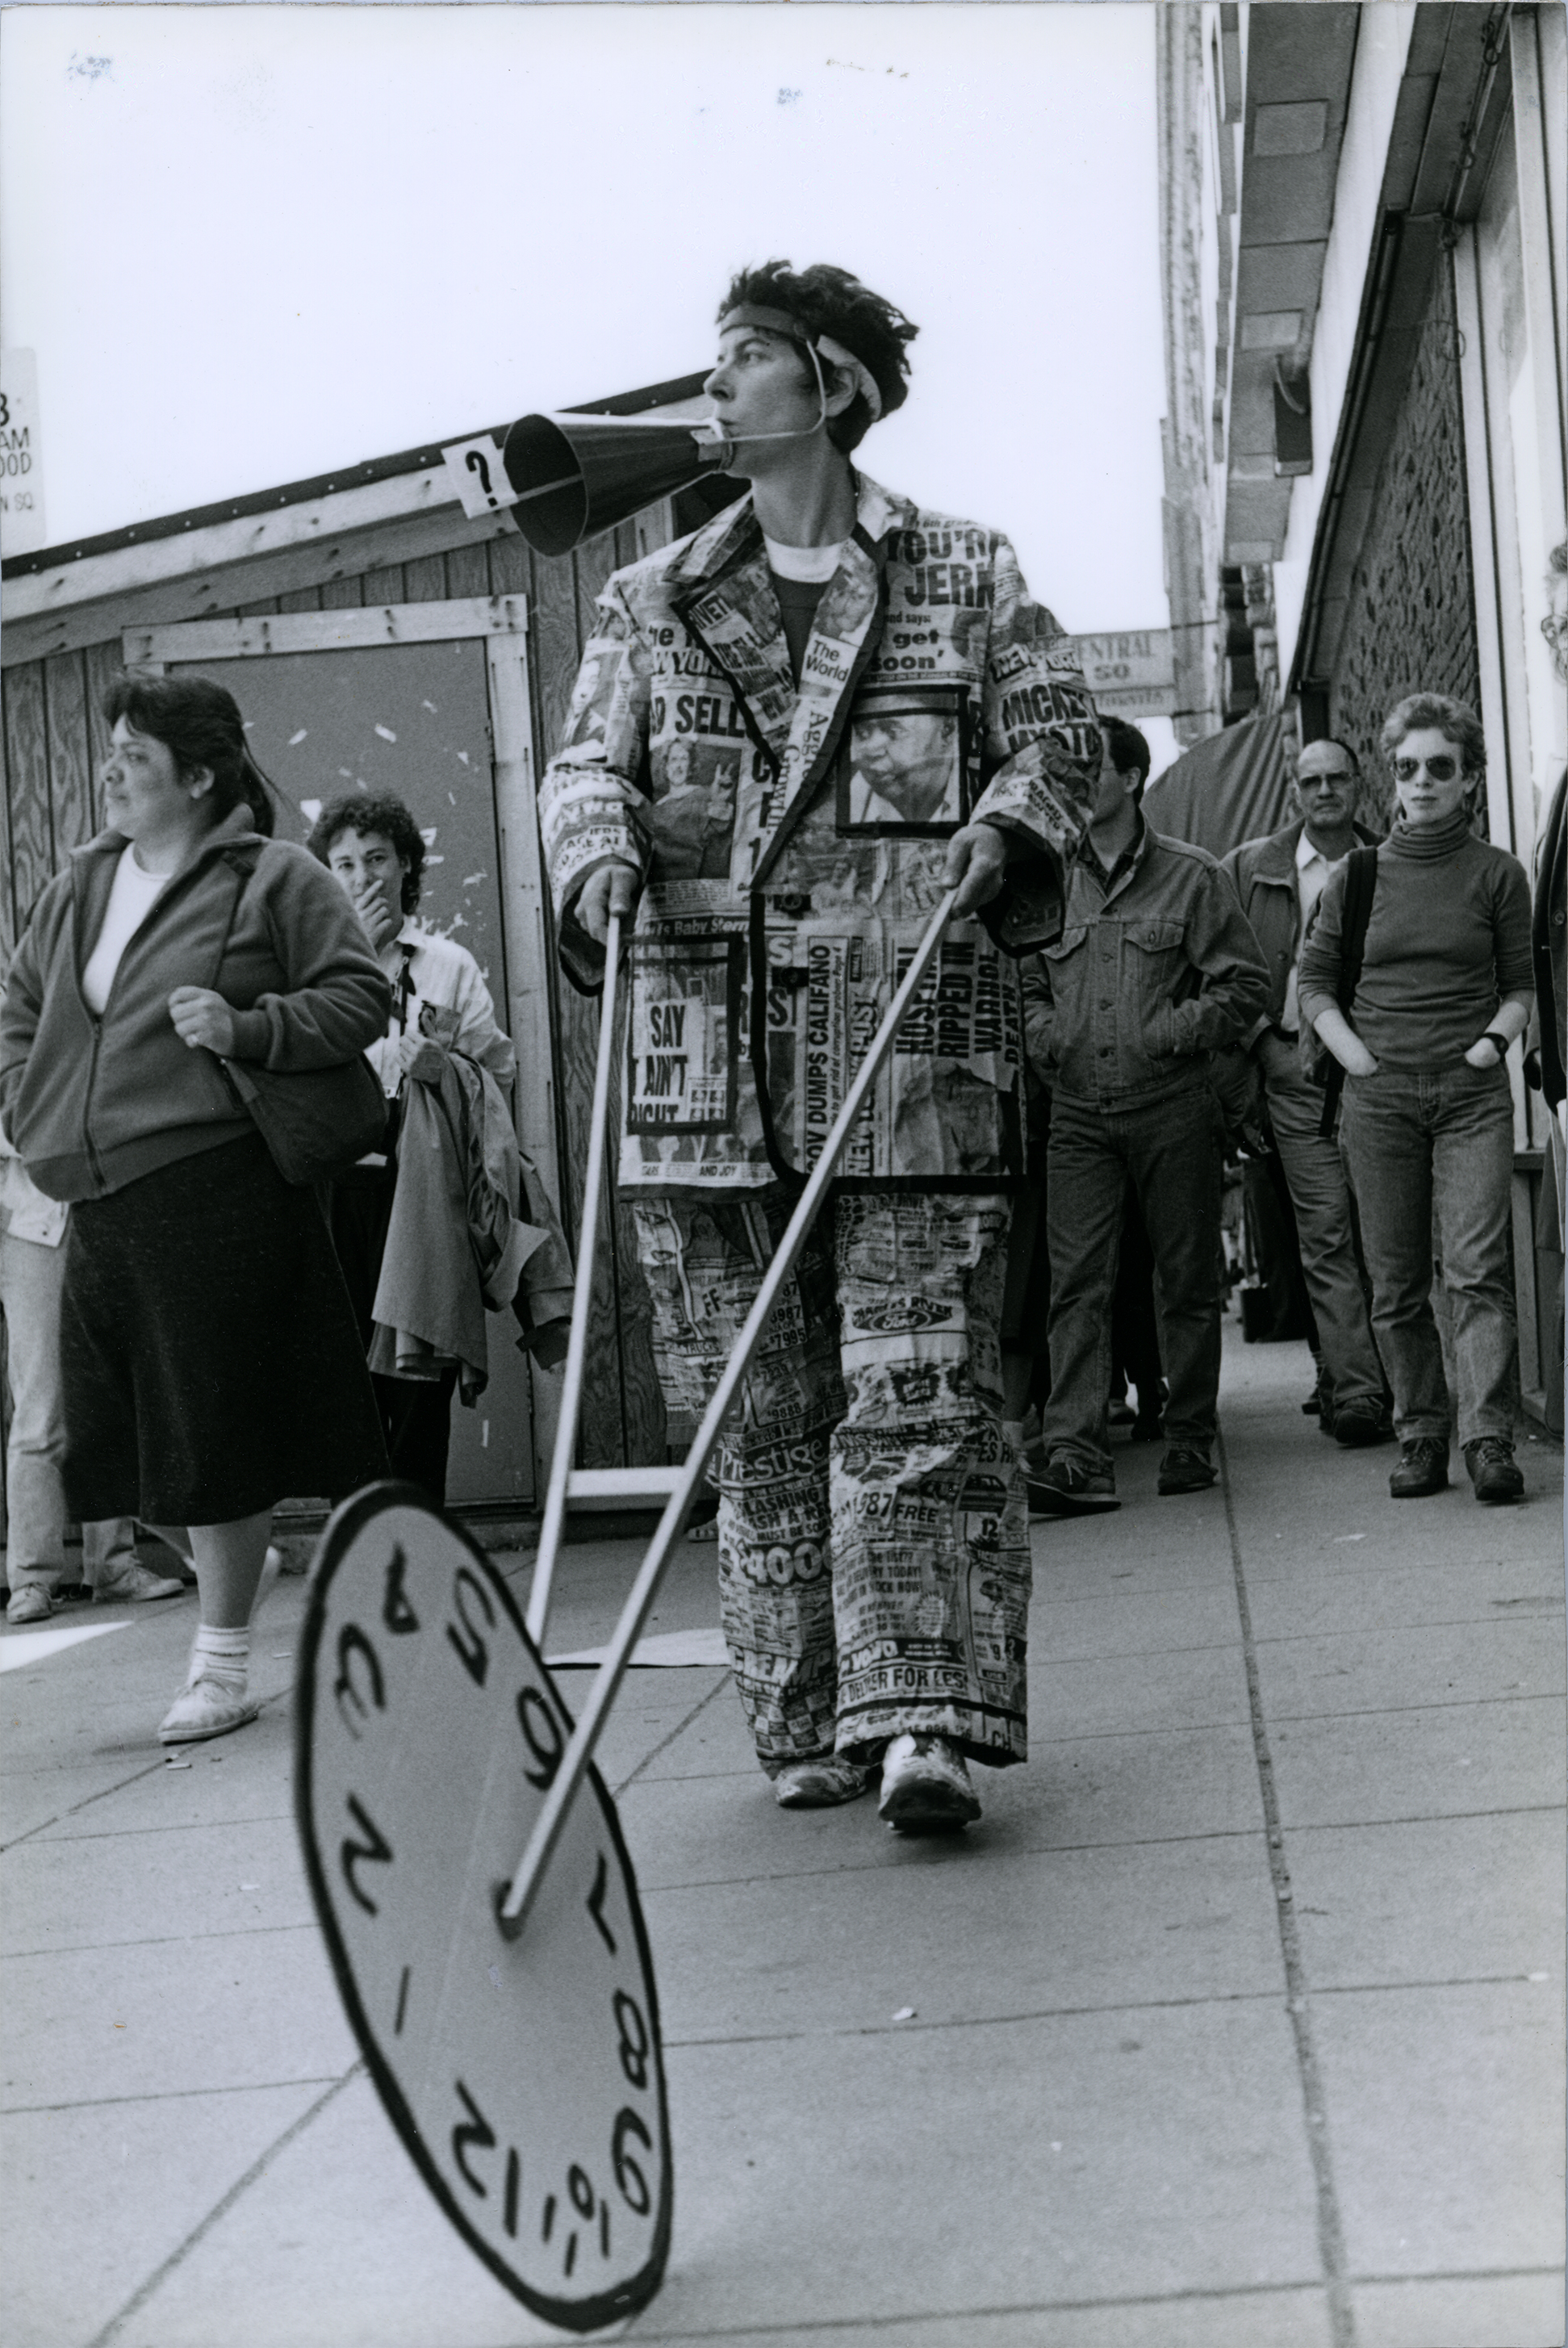  Newspaper Suit: Central Square 1987 